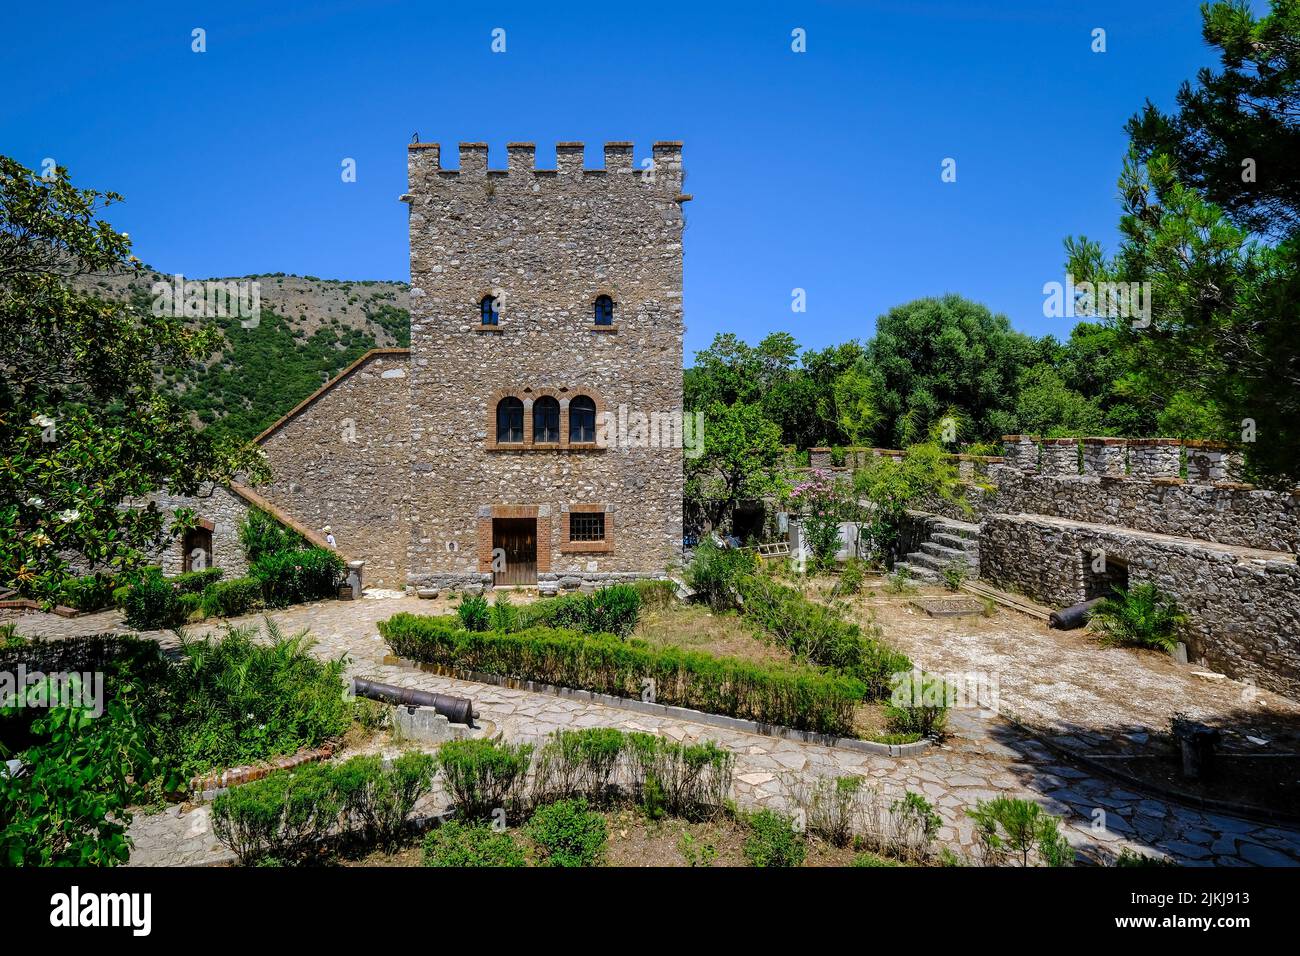 Butrint, Ksamil, Albania - El castillo veneciano en la acrópolis en la antigua Butrint, Patrimonio de la Humanidad ciudad arruinada de Butrint. Foto de stock